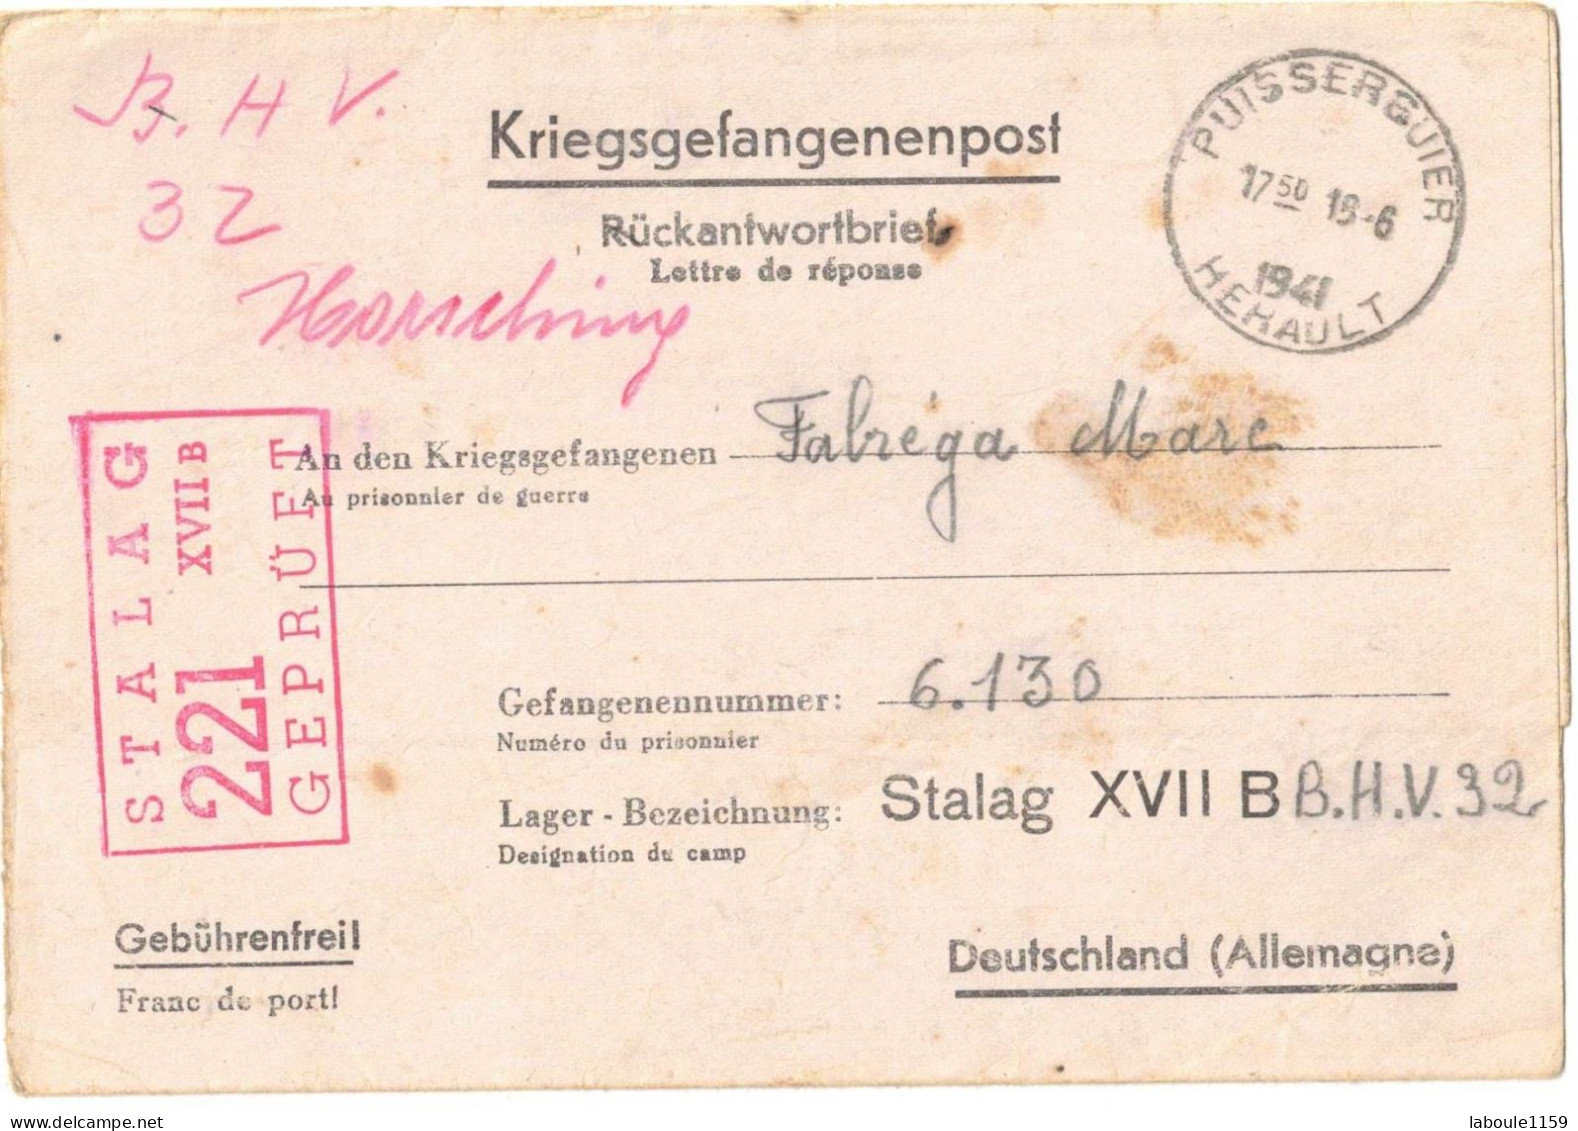 KRIEGSGEFANGENENPOST CAMP PRISONNIERS GUERRE 39/45 FABREGA PUISSERGUIER STALAG XVII B GEPRÜFT 221 CENSURE MILITARIA - 2. Weltkrieg 1939-1945